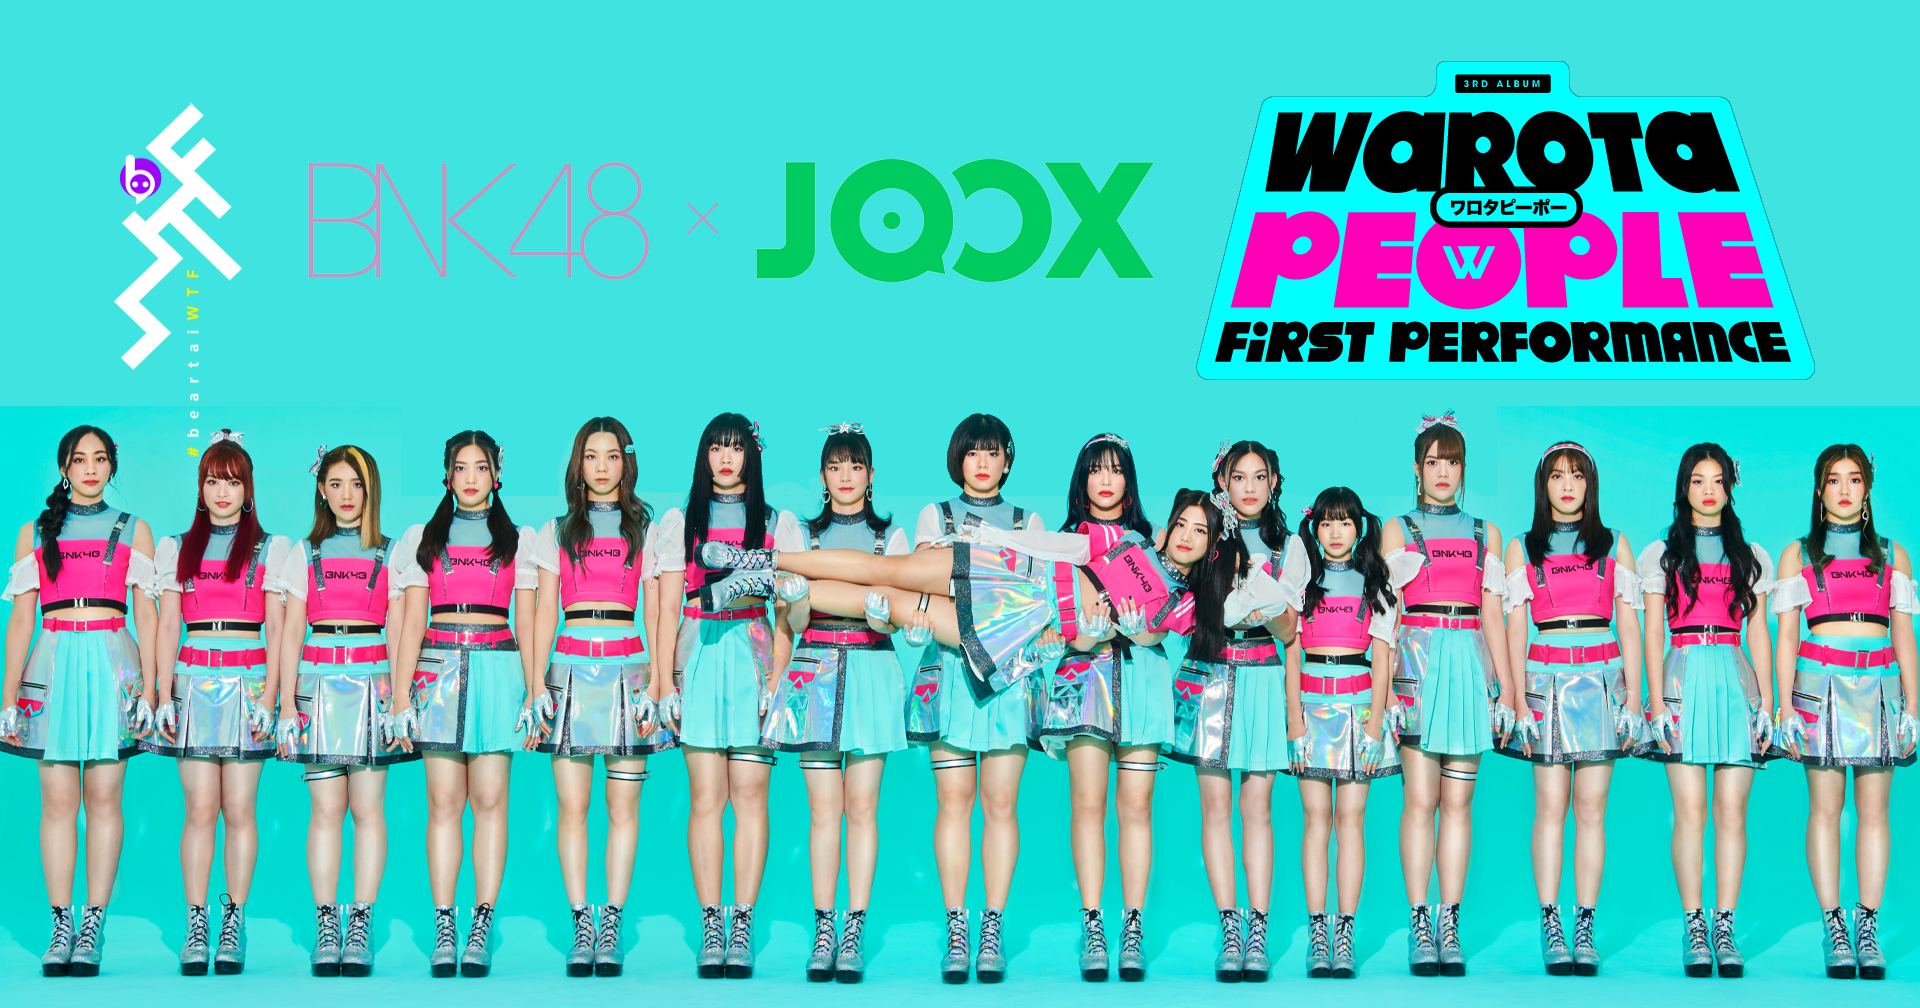 BNK48 x JOOX จัด Virtual Mini Concert เปิด 3rd Album “WAROTA PEOPLE”